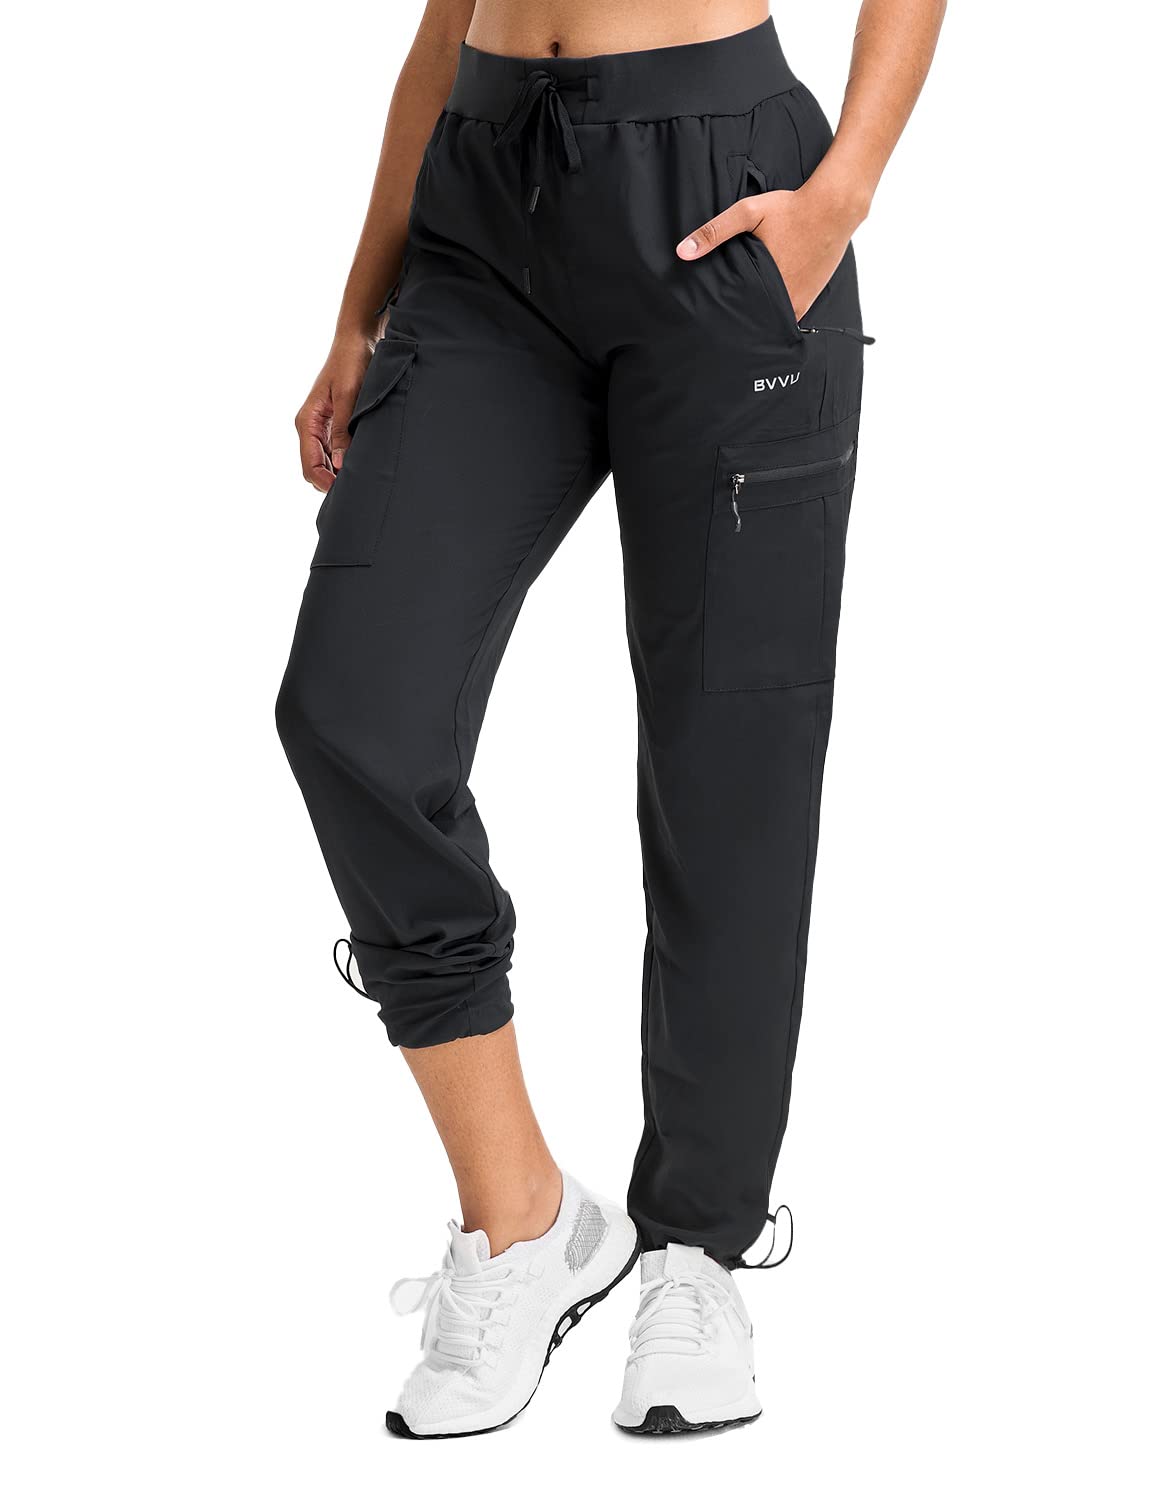 BVVU Women's Cargo Joggers Lightweight Quick Dry Hiking Pants Outdoor  Waterproof Athletic Workout Pants with Zipper Pockets Black Medium